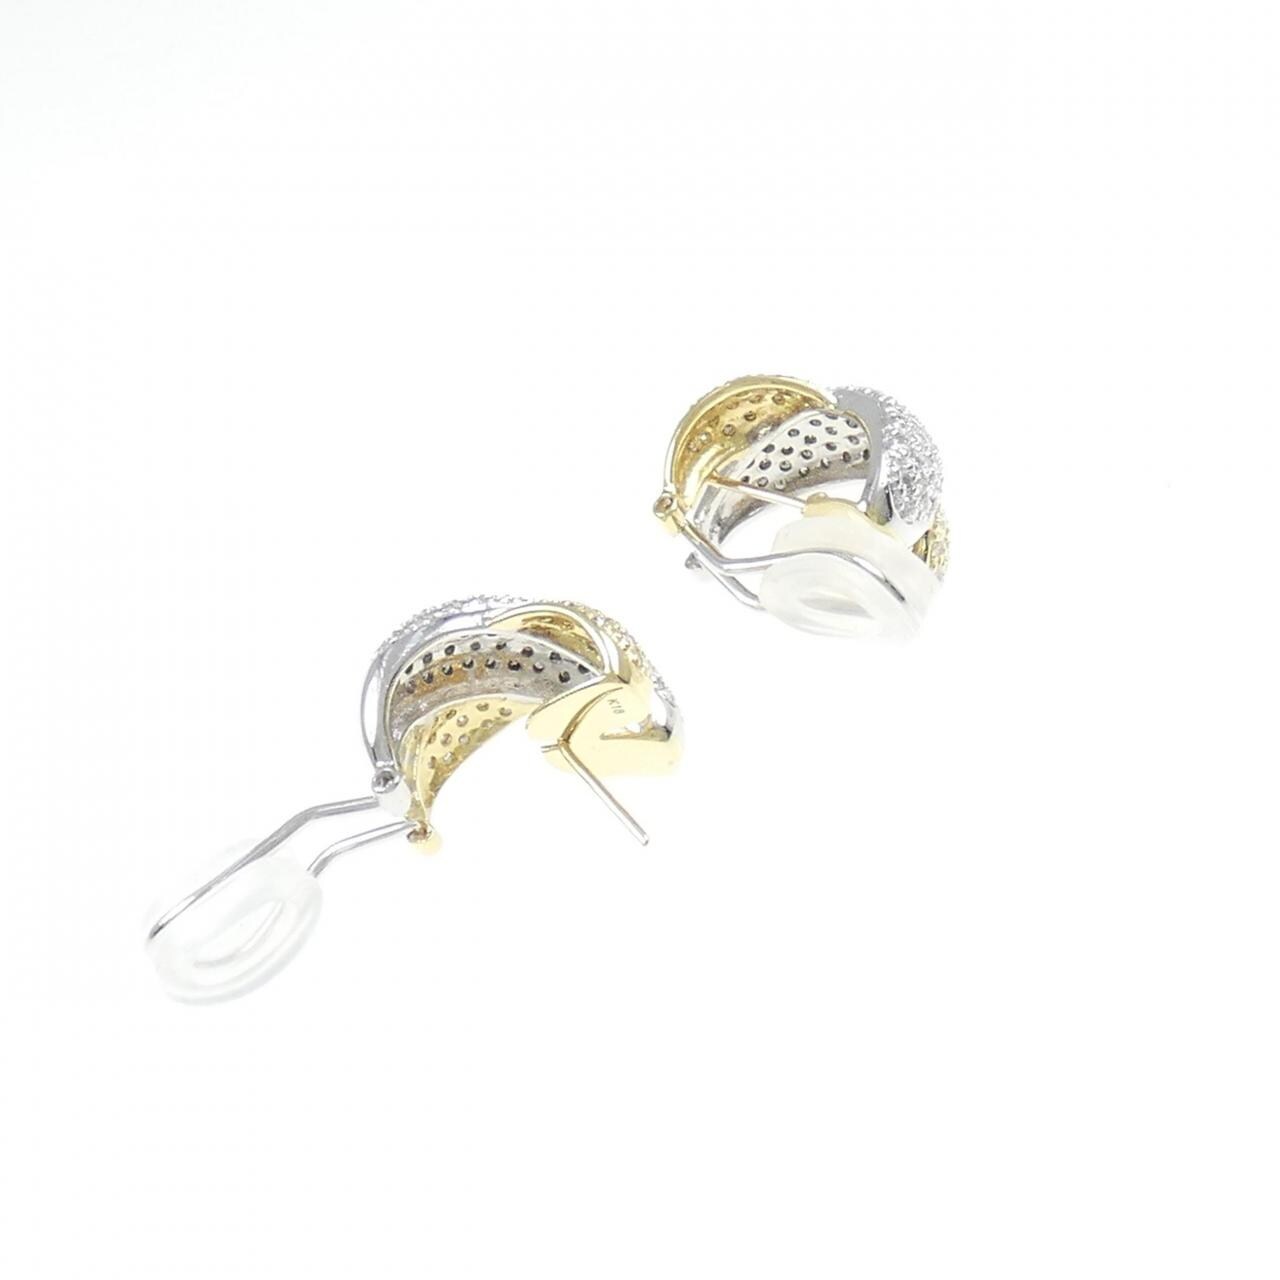 K18YG/K18WG Diamond earrings